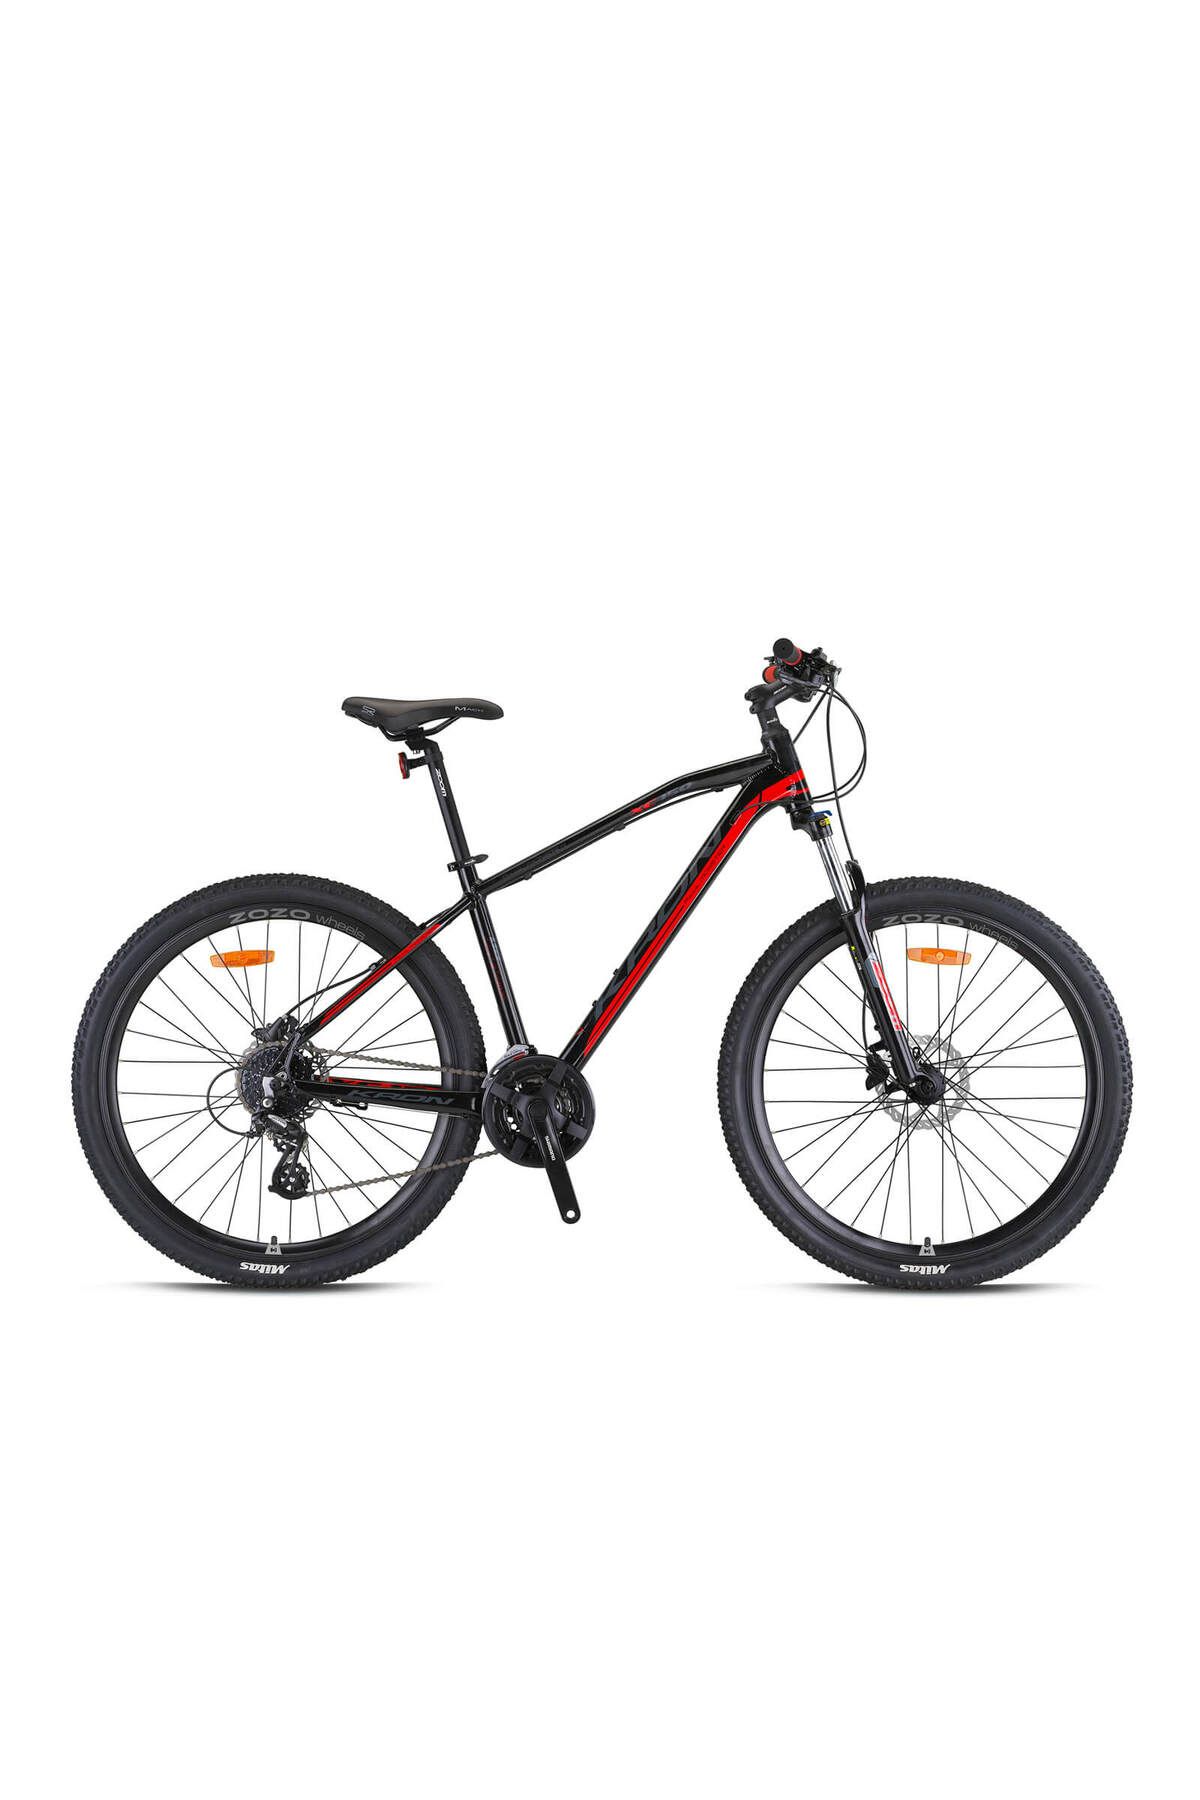 Kron Xc150 Hd 27,5 Jant 17cm Kadro Siyah-kırmızı Bisiklet